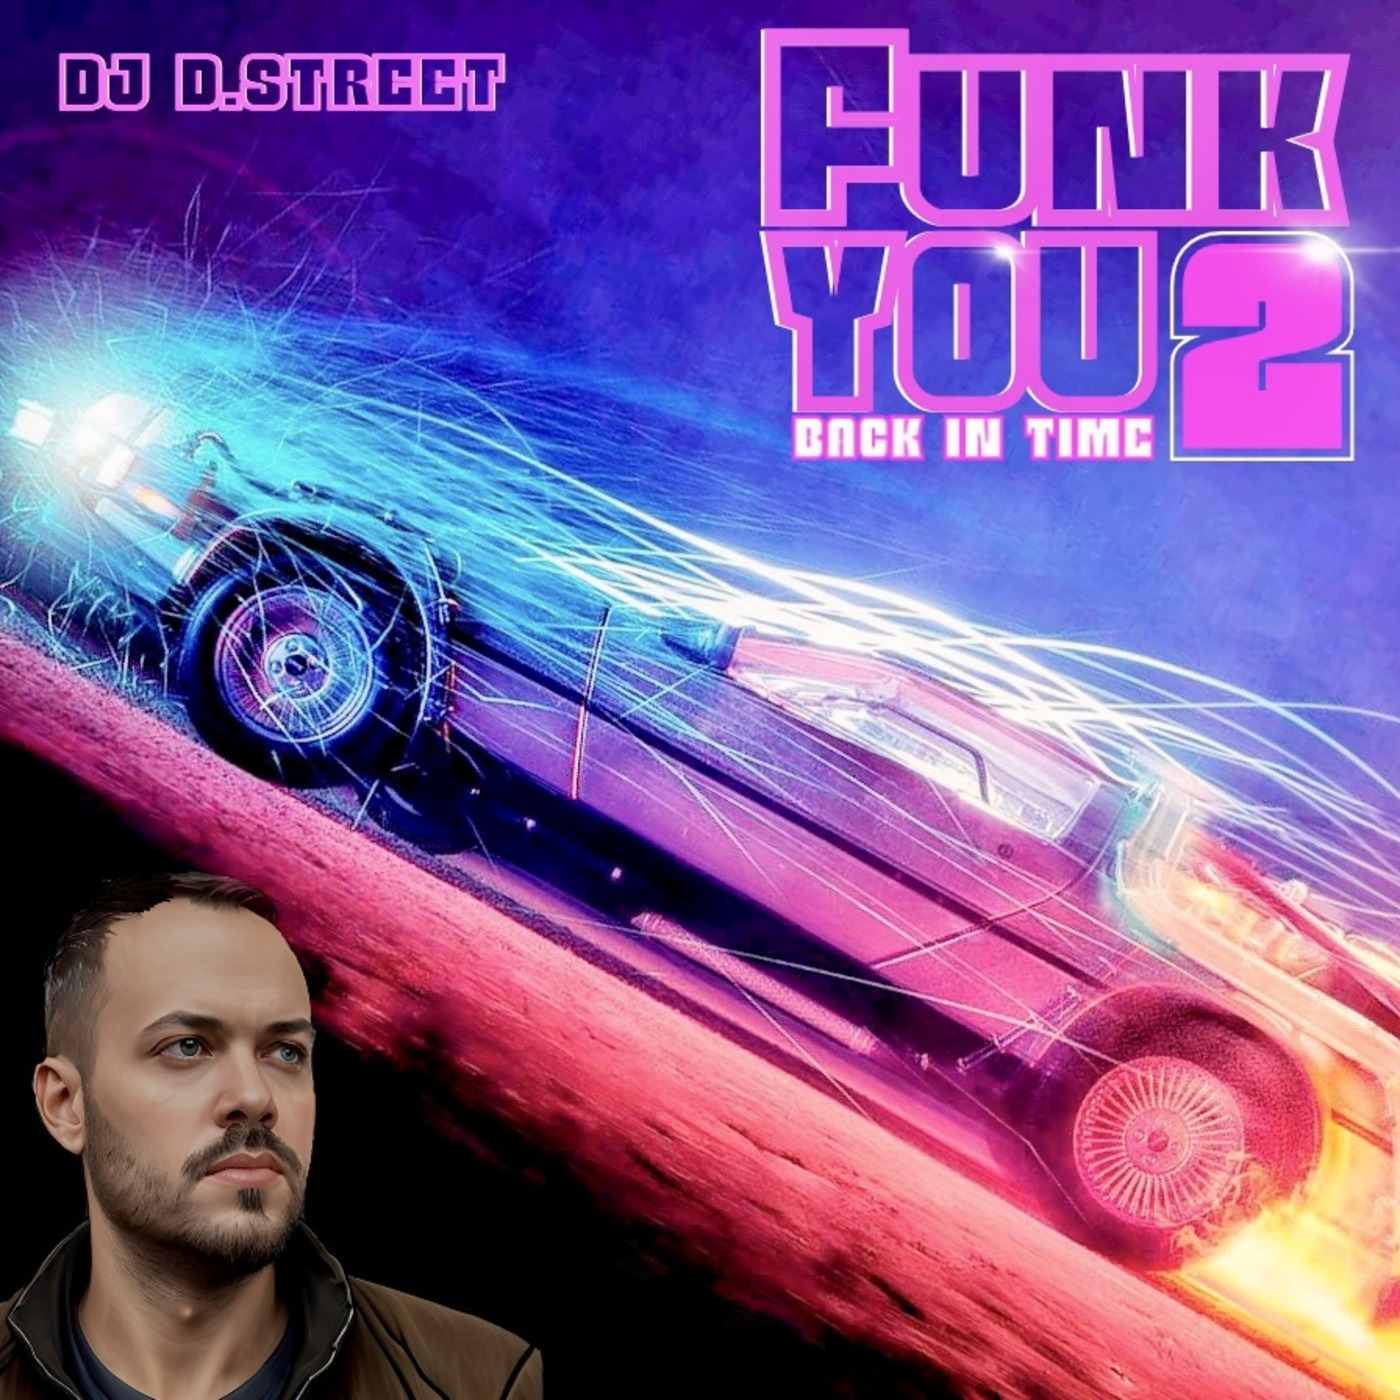 DJ D.Street - Funk you 2 Back in Time